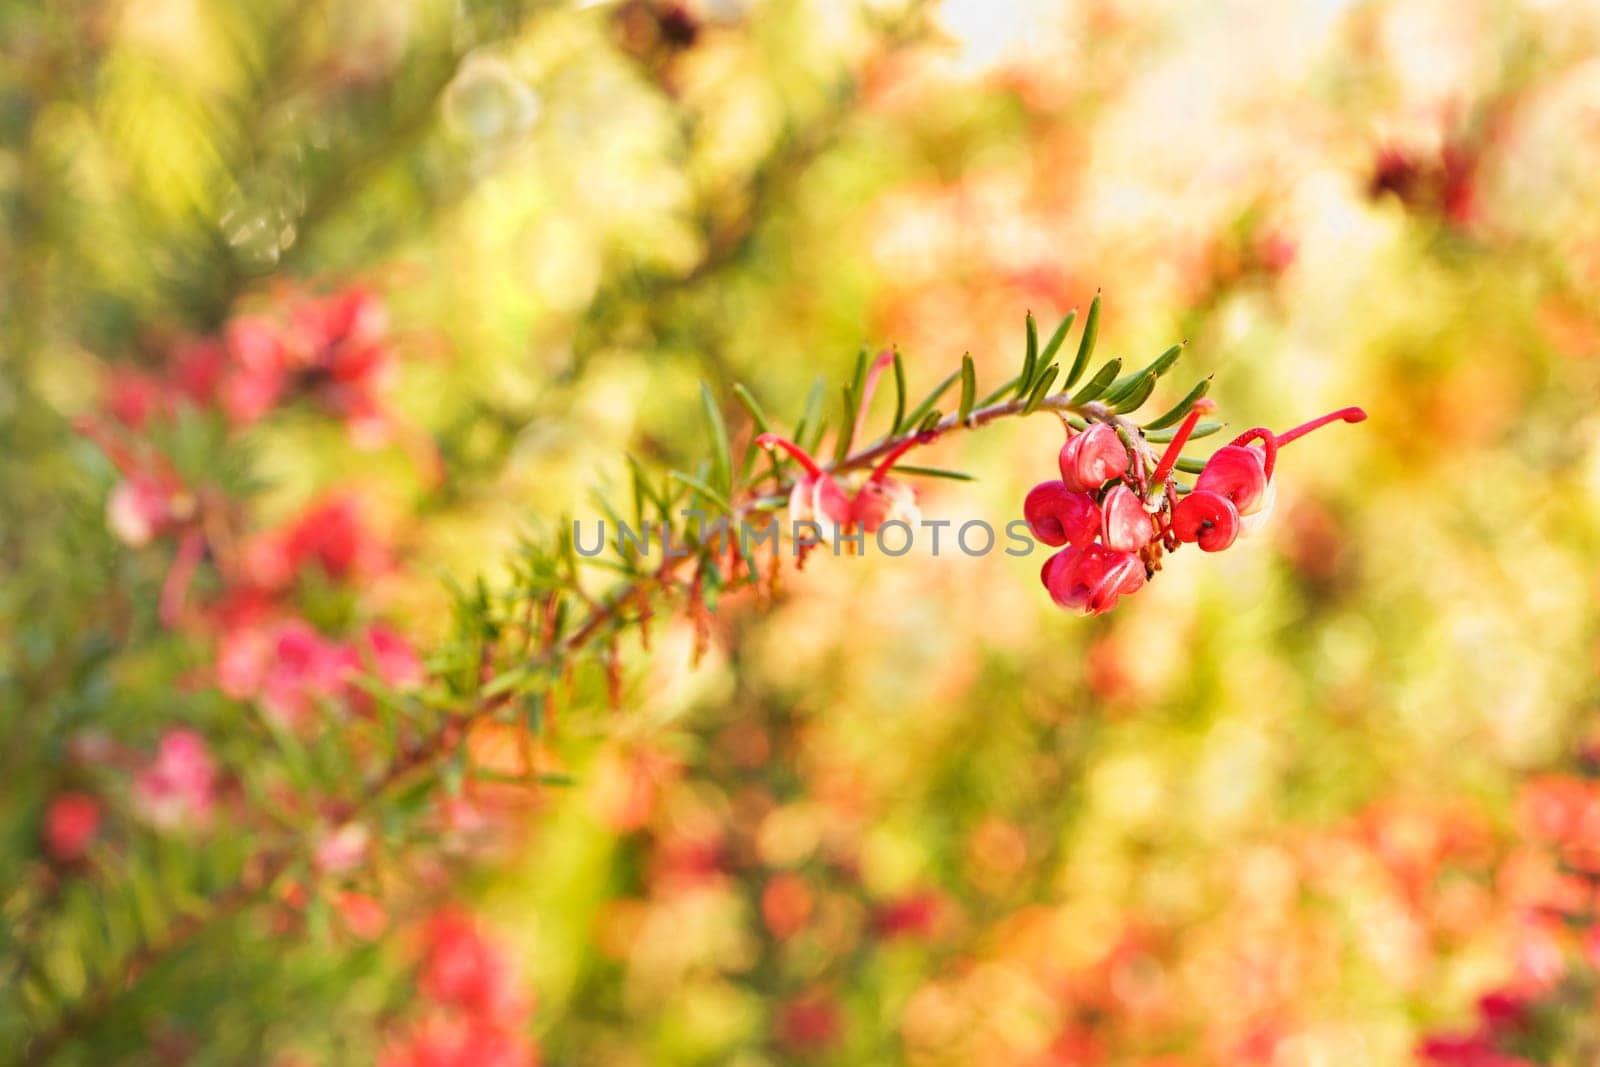 Rosemary grevillea red flower by victimewalker